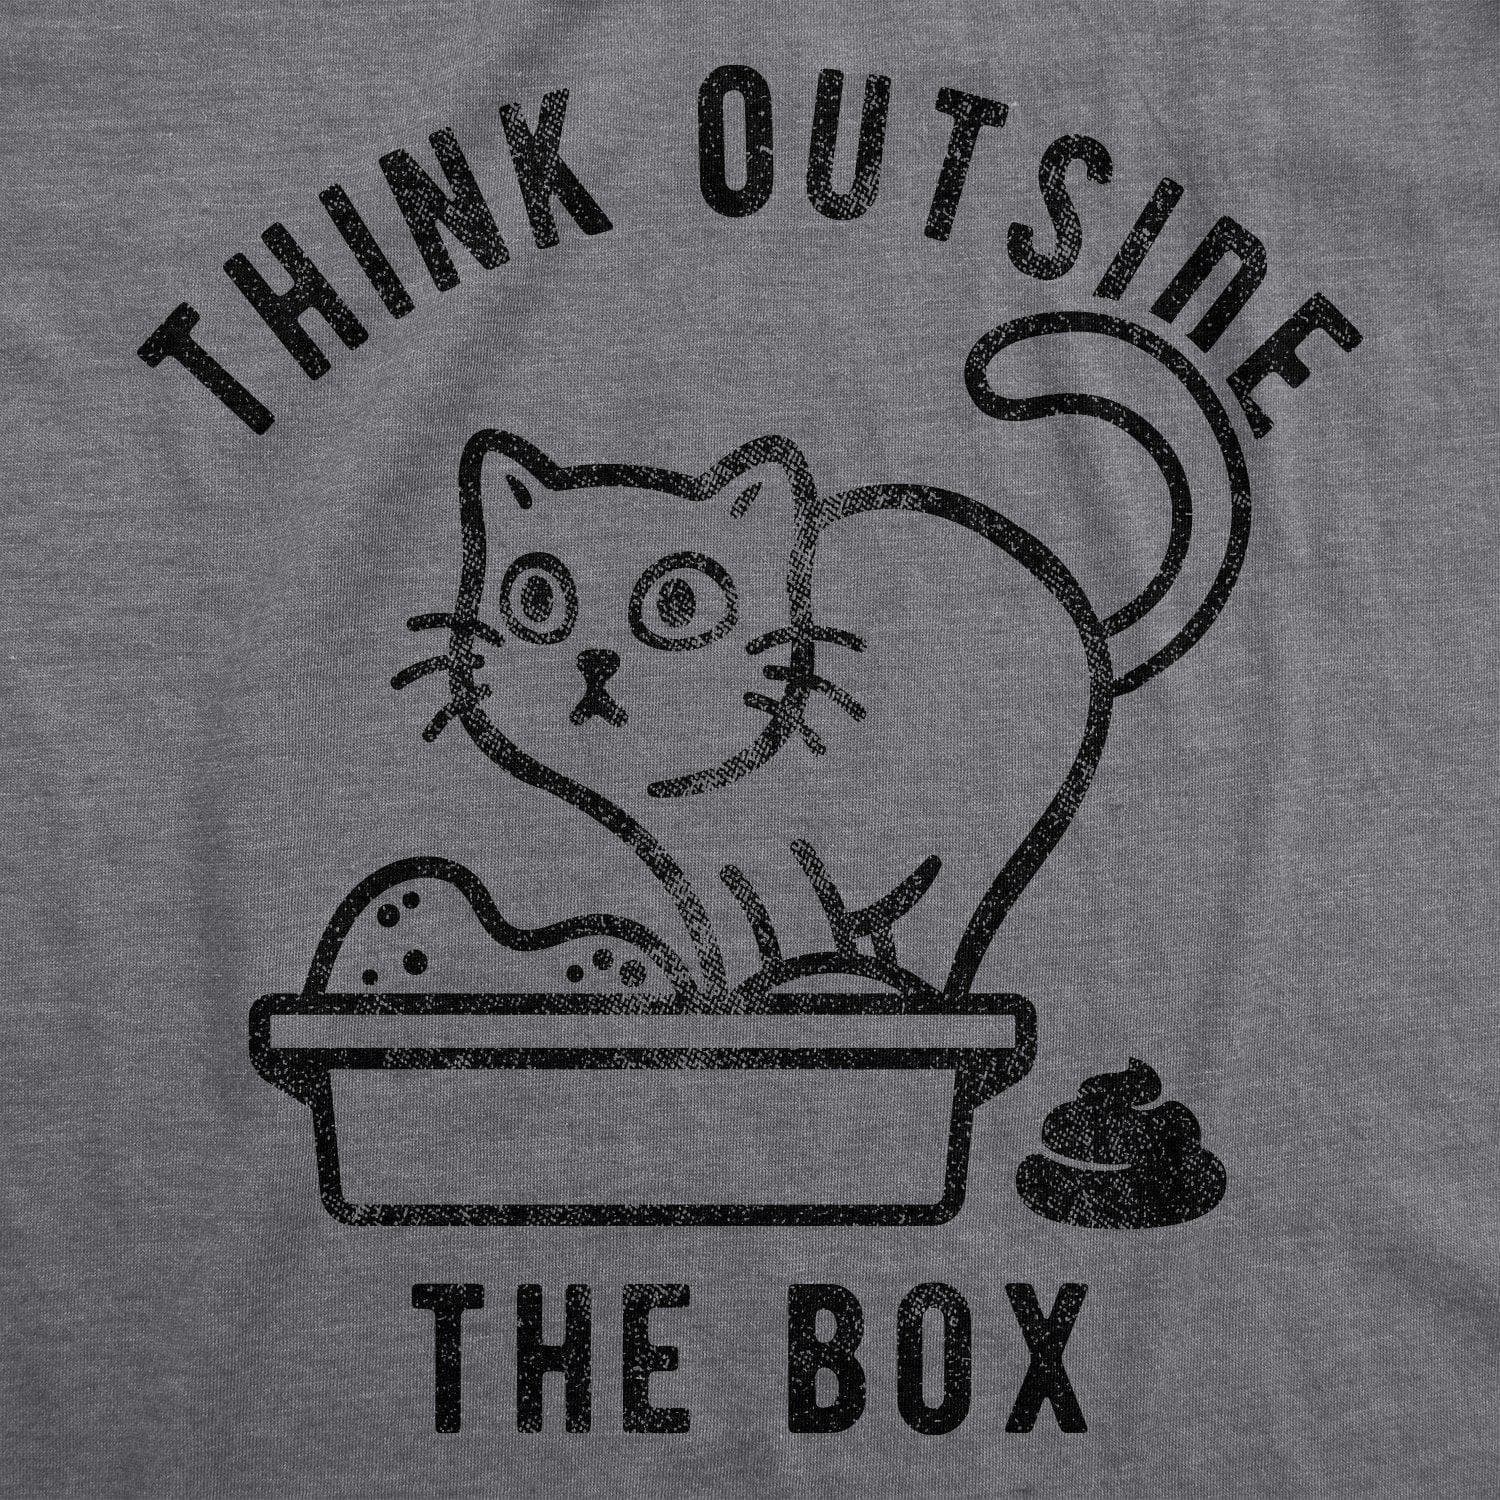 Think Outside The Litter Box Men's Tshirt - Crazy Dog T-Shirts